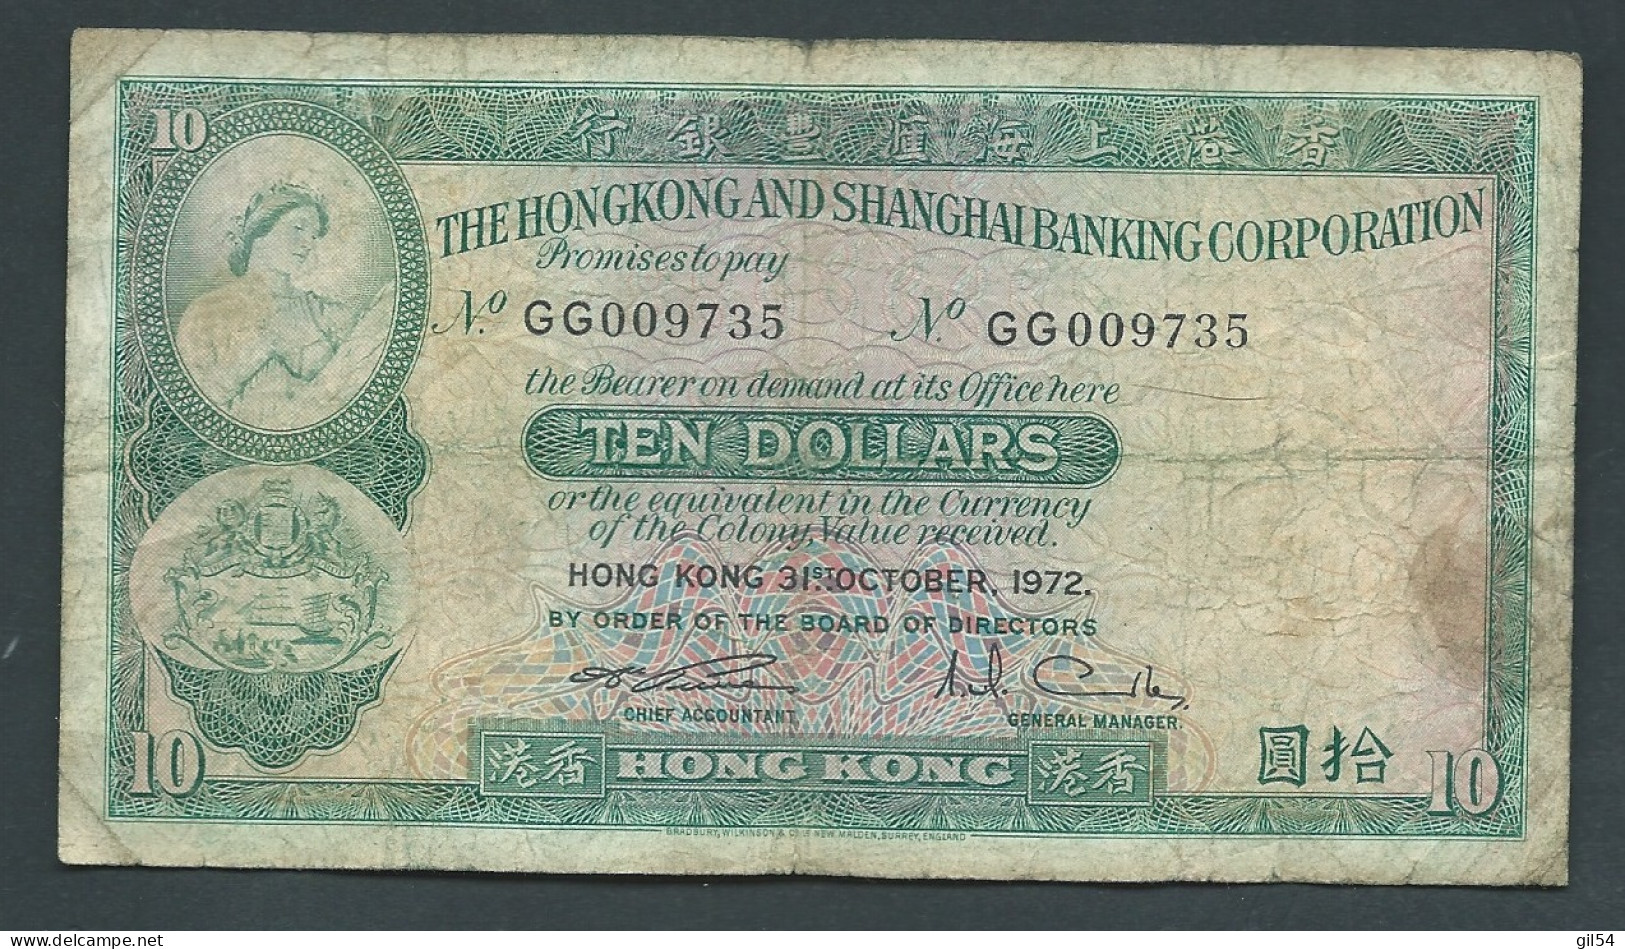 Billet, HONG KONG 1972 HSBC 10 Dollars - GG009735- Laura 10710 - Hongkong